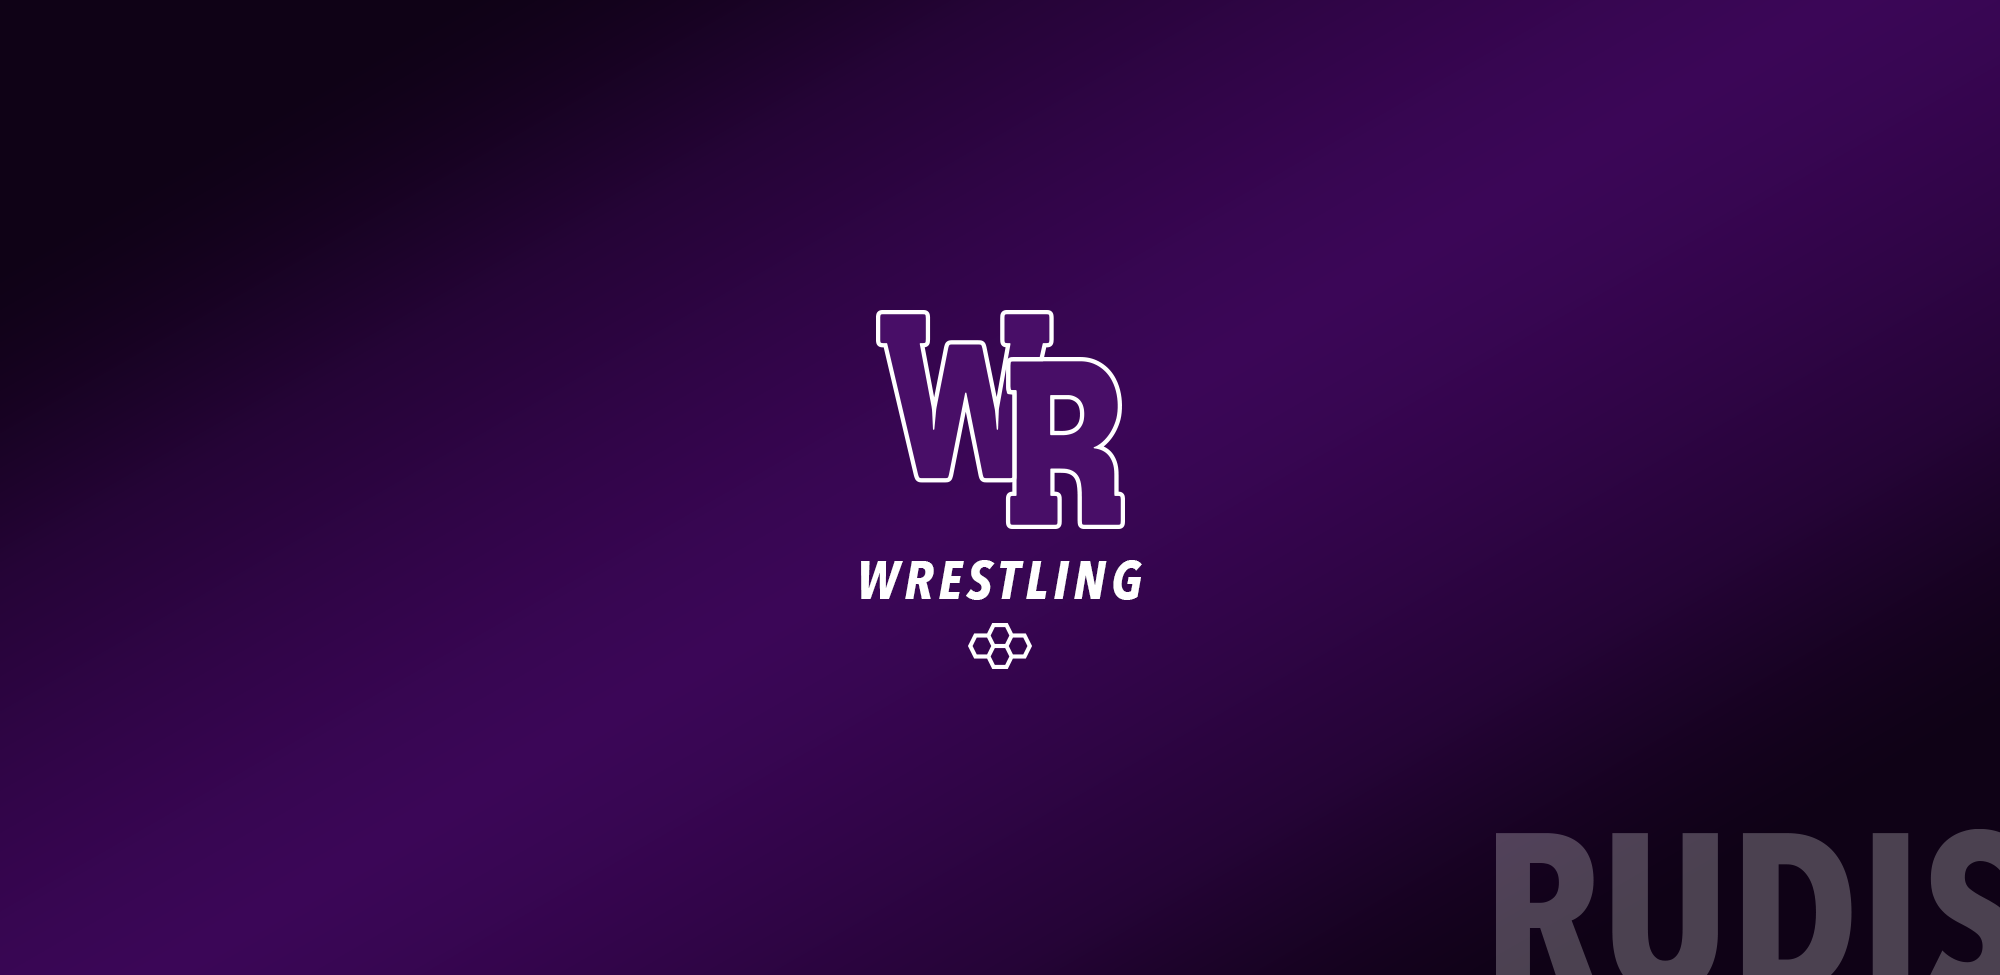 Wind River Wrestling Team Store